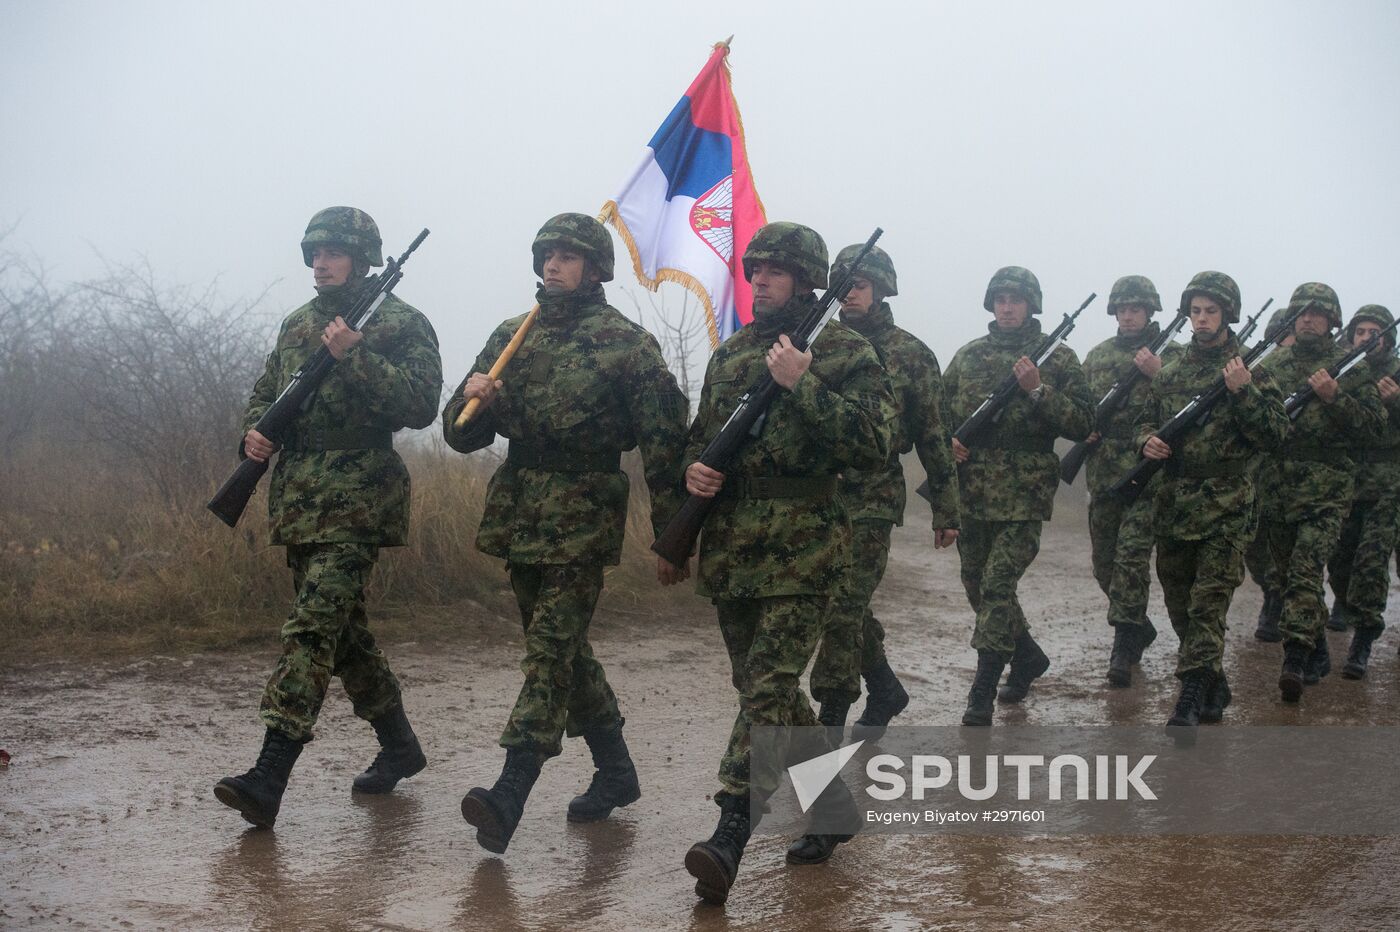 Slavic Brotherhood-2016 military exercise of Russia, Belarus and Serbia